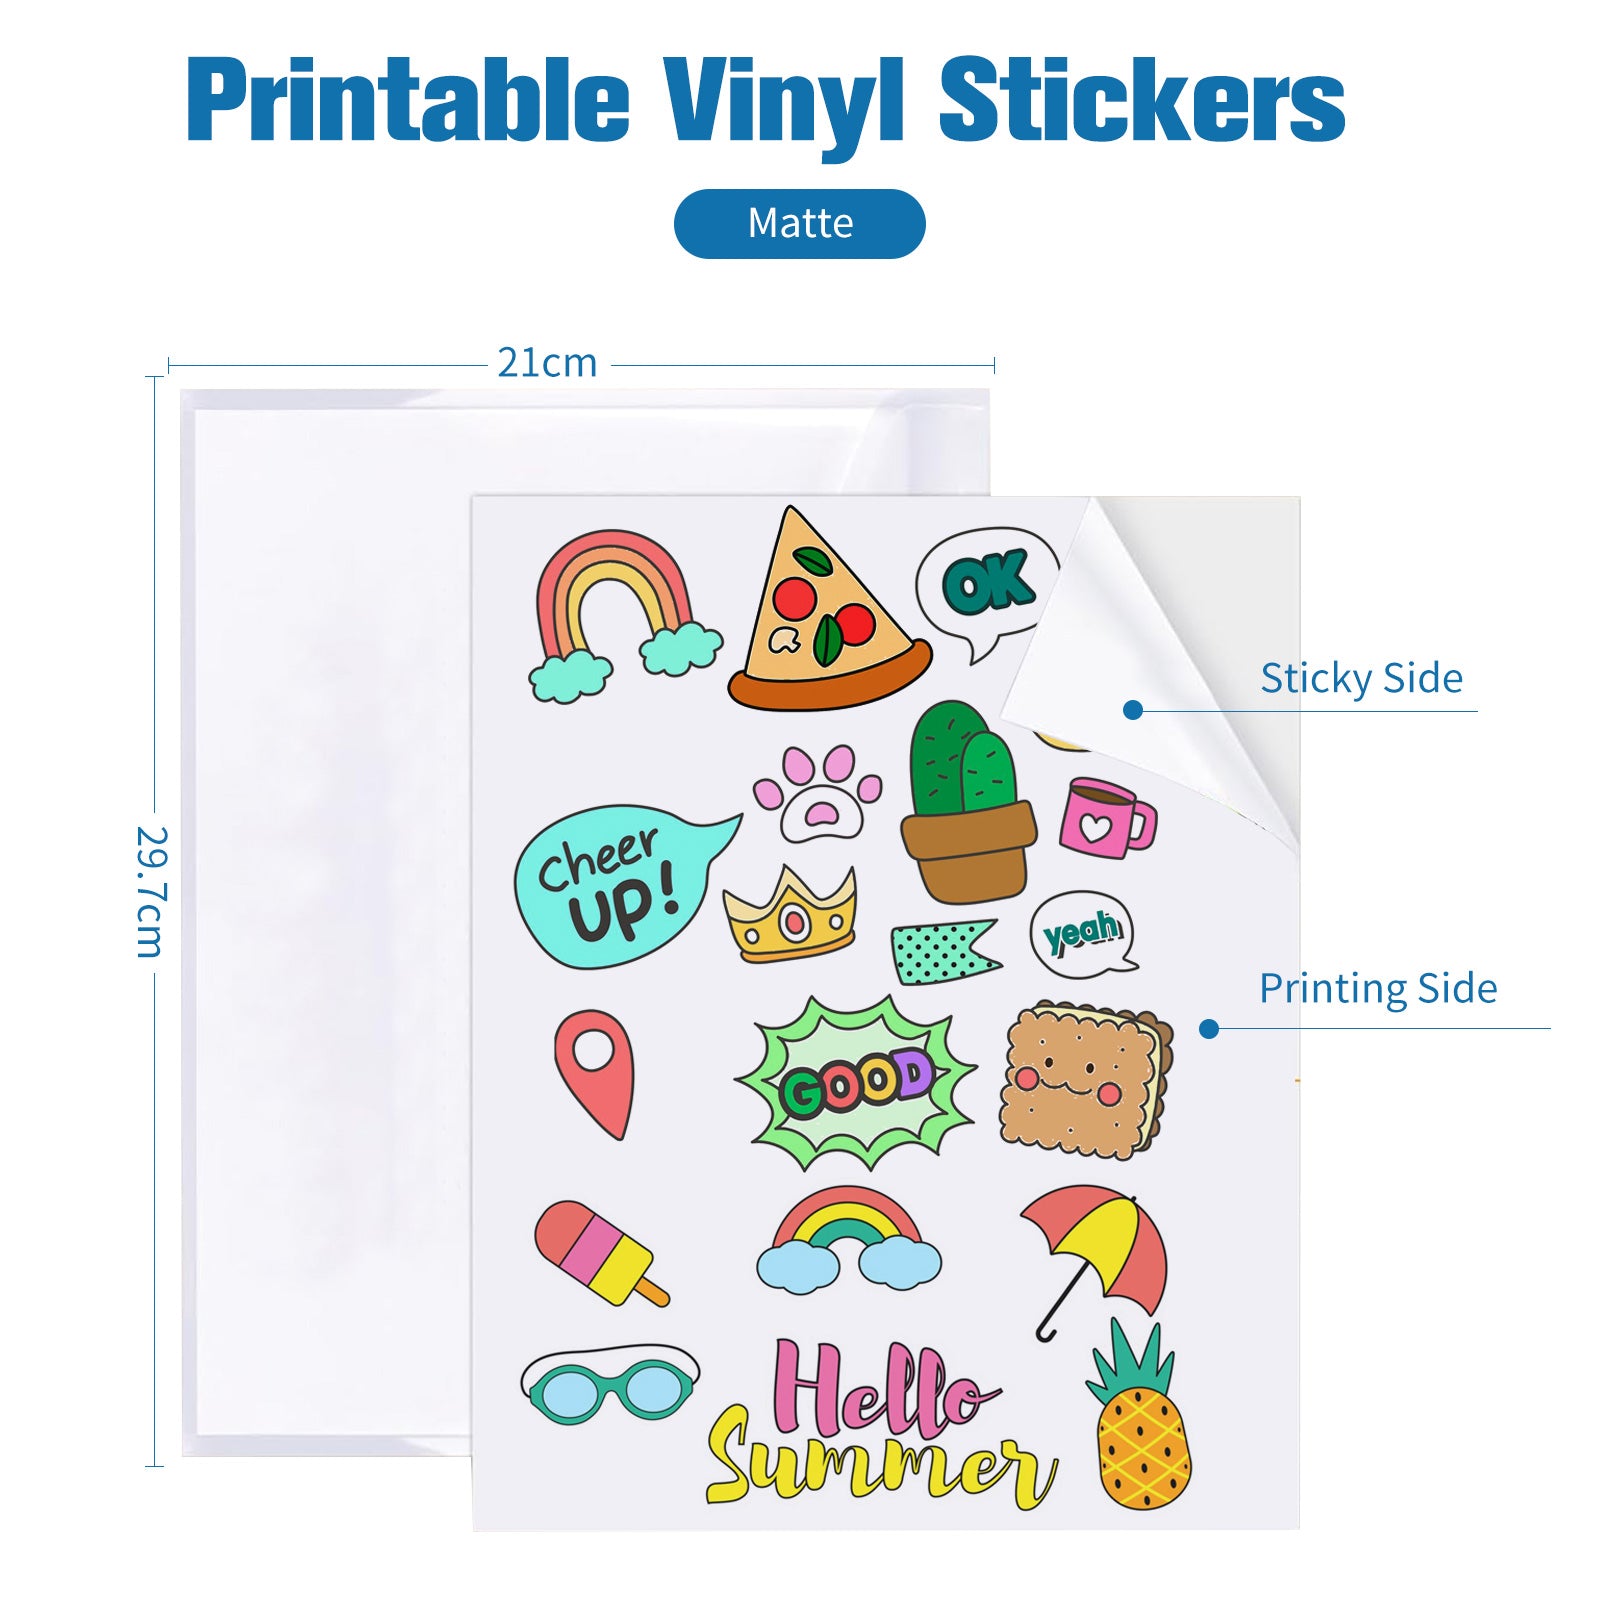 Printable Vinyl Sticker Paper, Matte White Sticker Paper for Inkjet Printer 30 Sheets A4